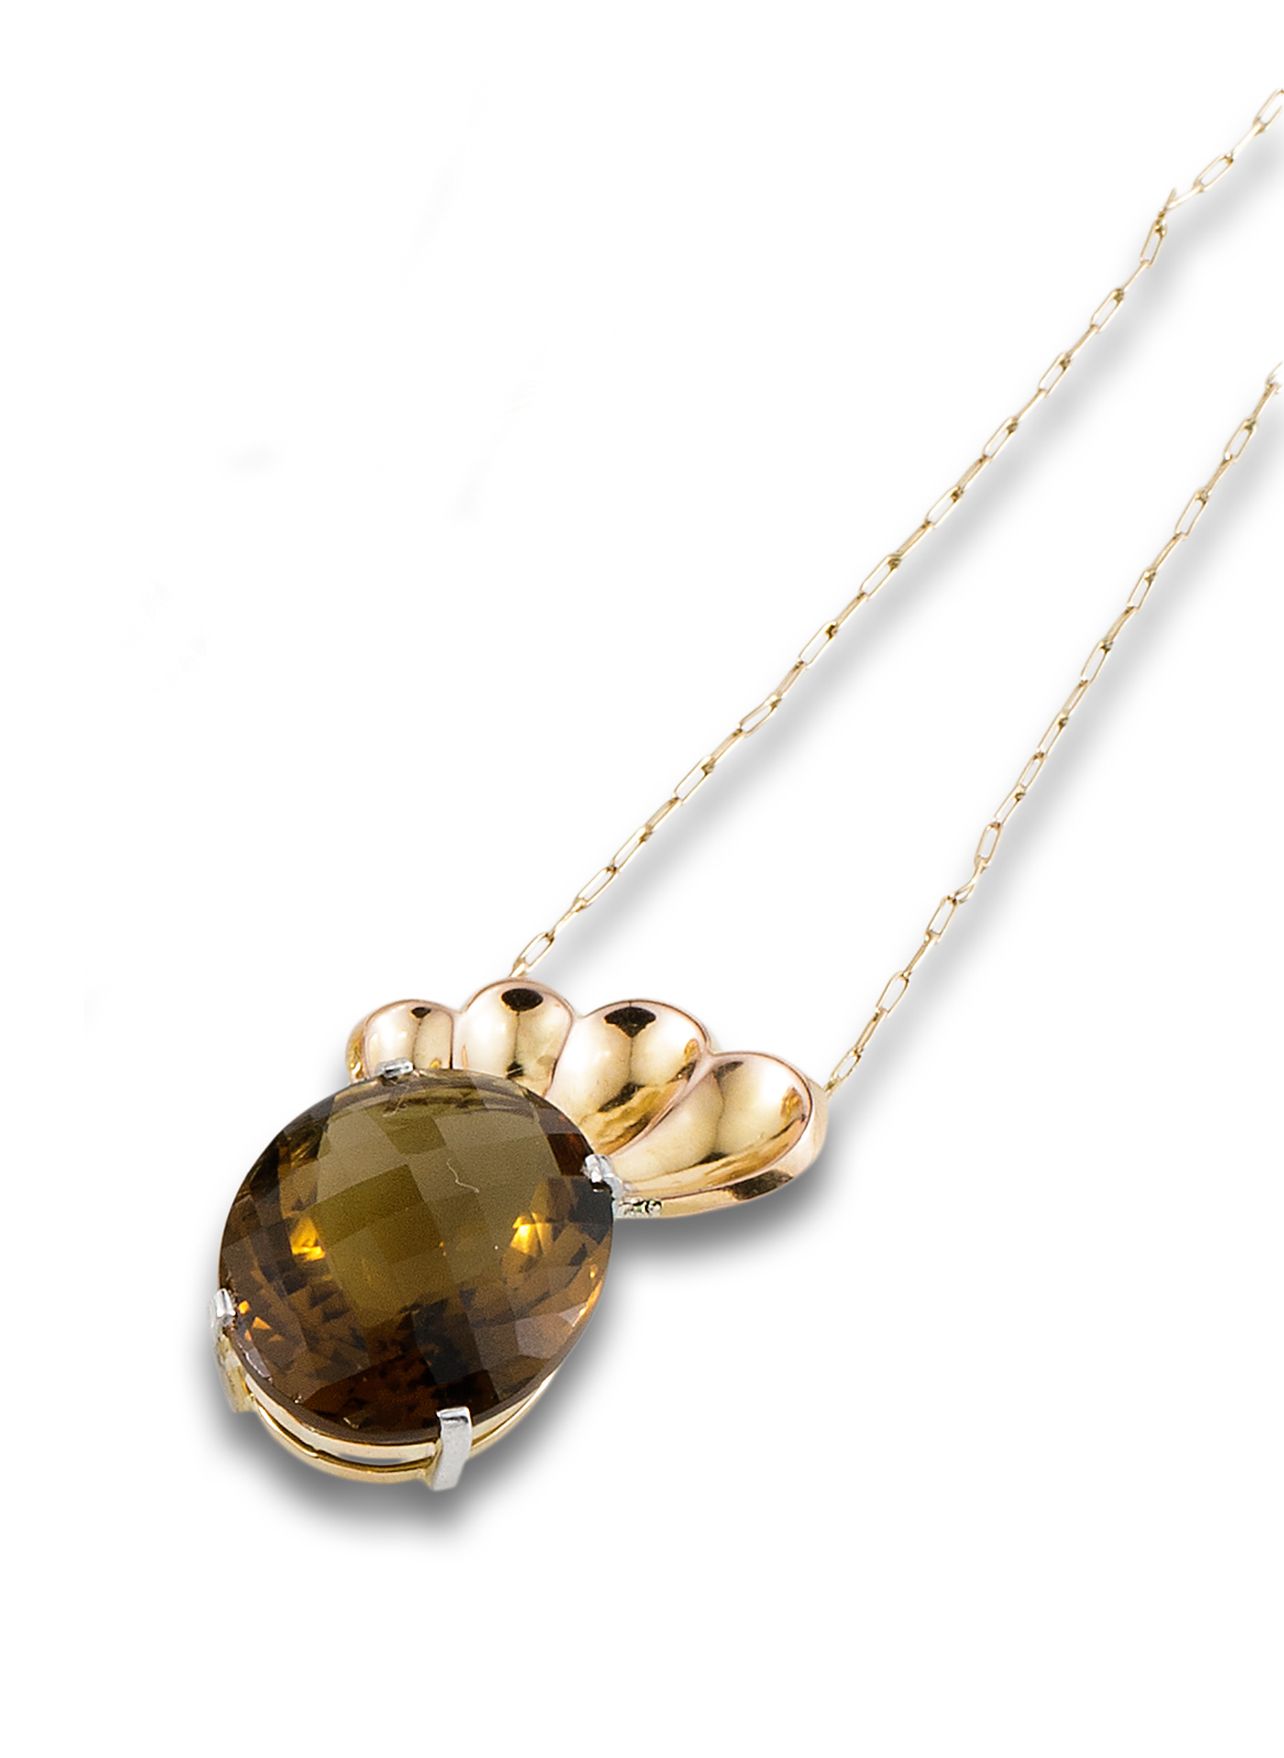 18 kt yellow gold chain and pendant. 由凸圆形烟熏石英切面形成，并带有多棱镜装饰。